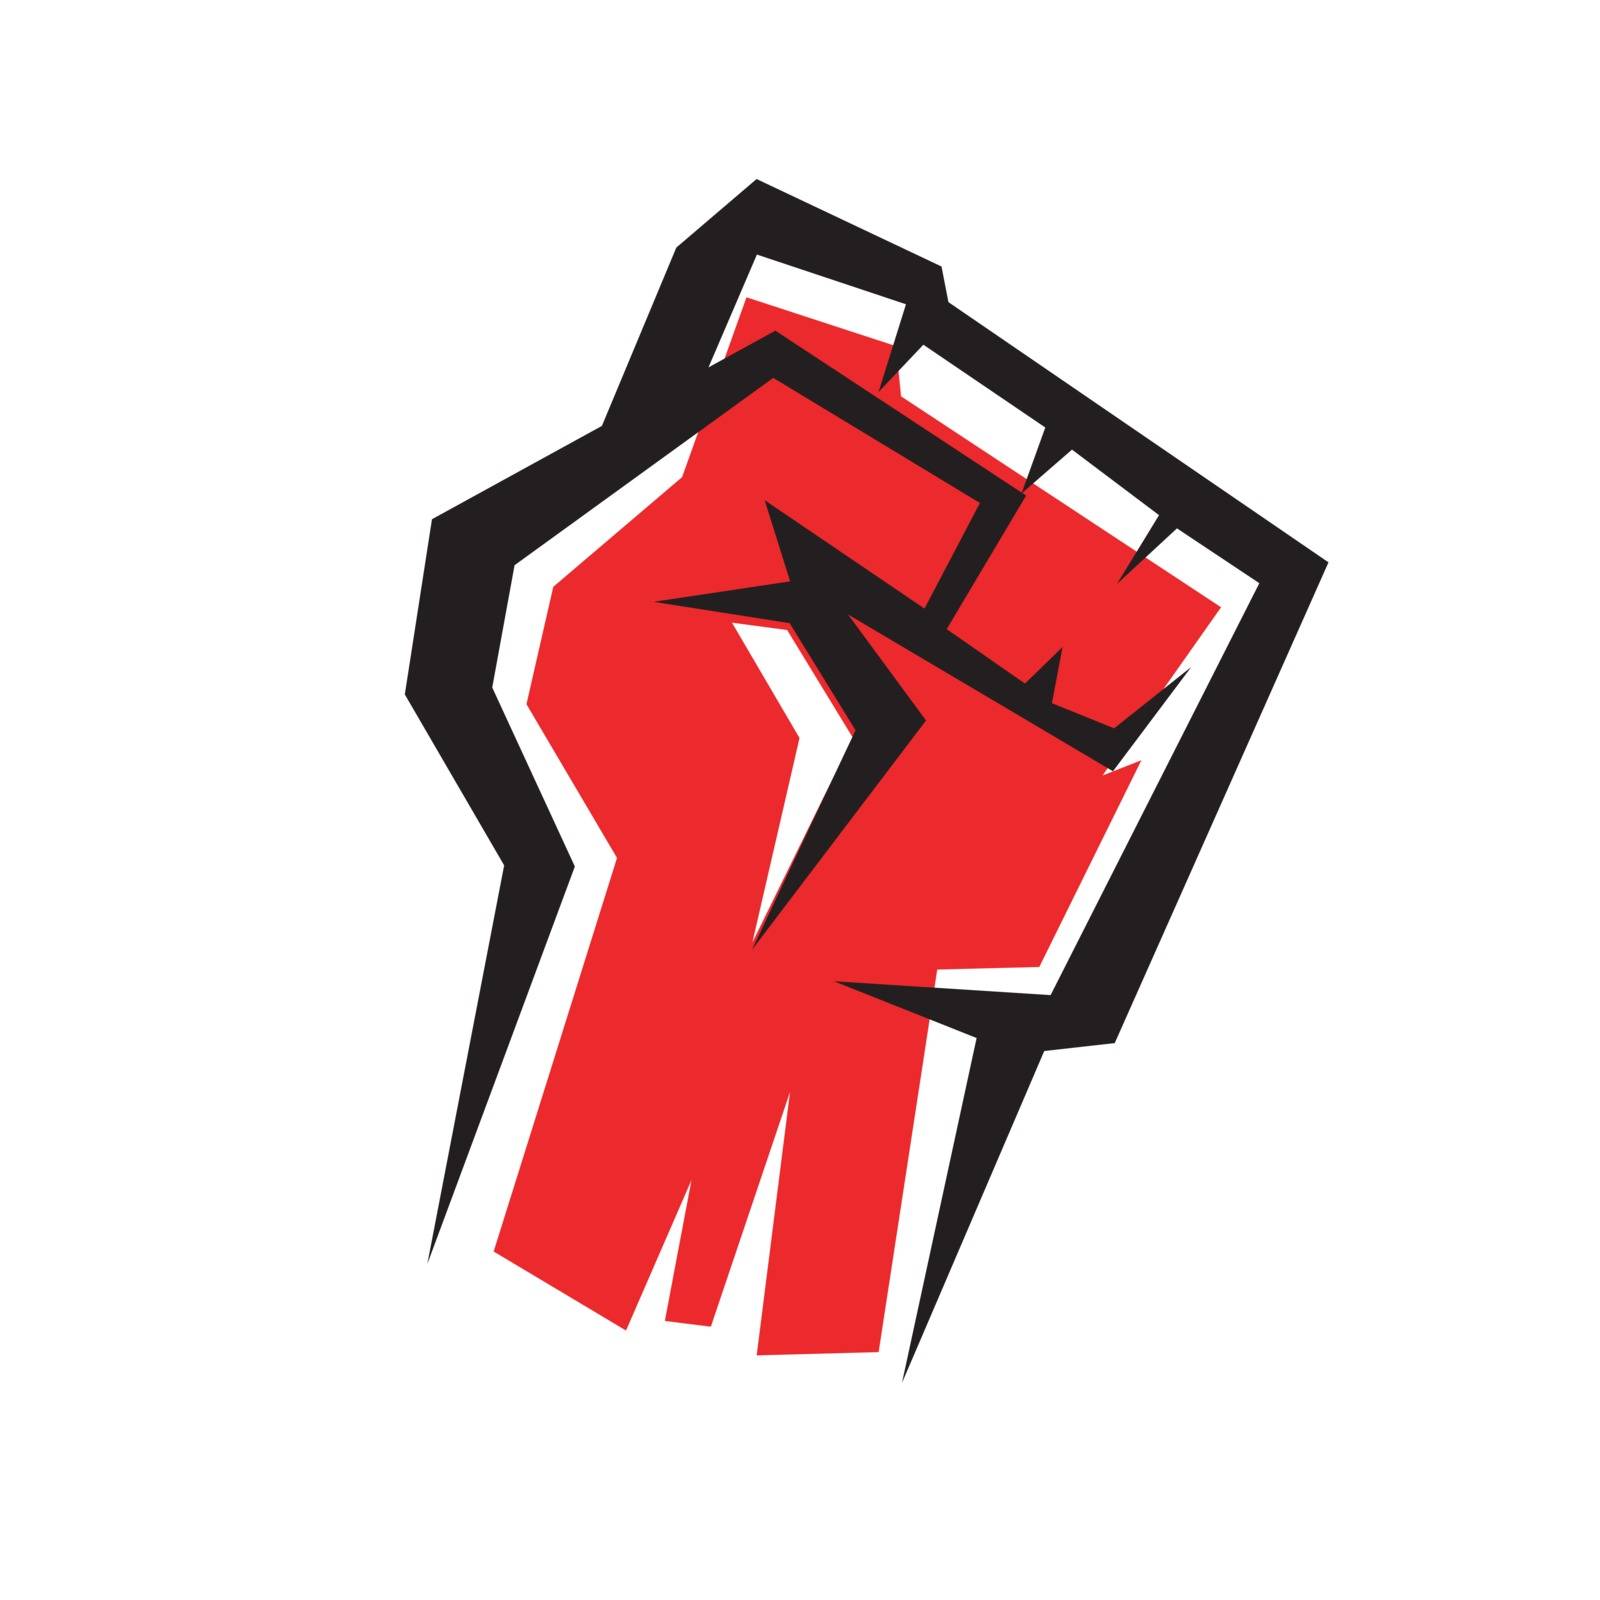 fist stylized vector icon, revolution concept